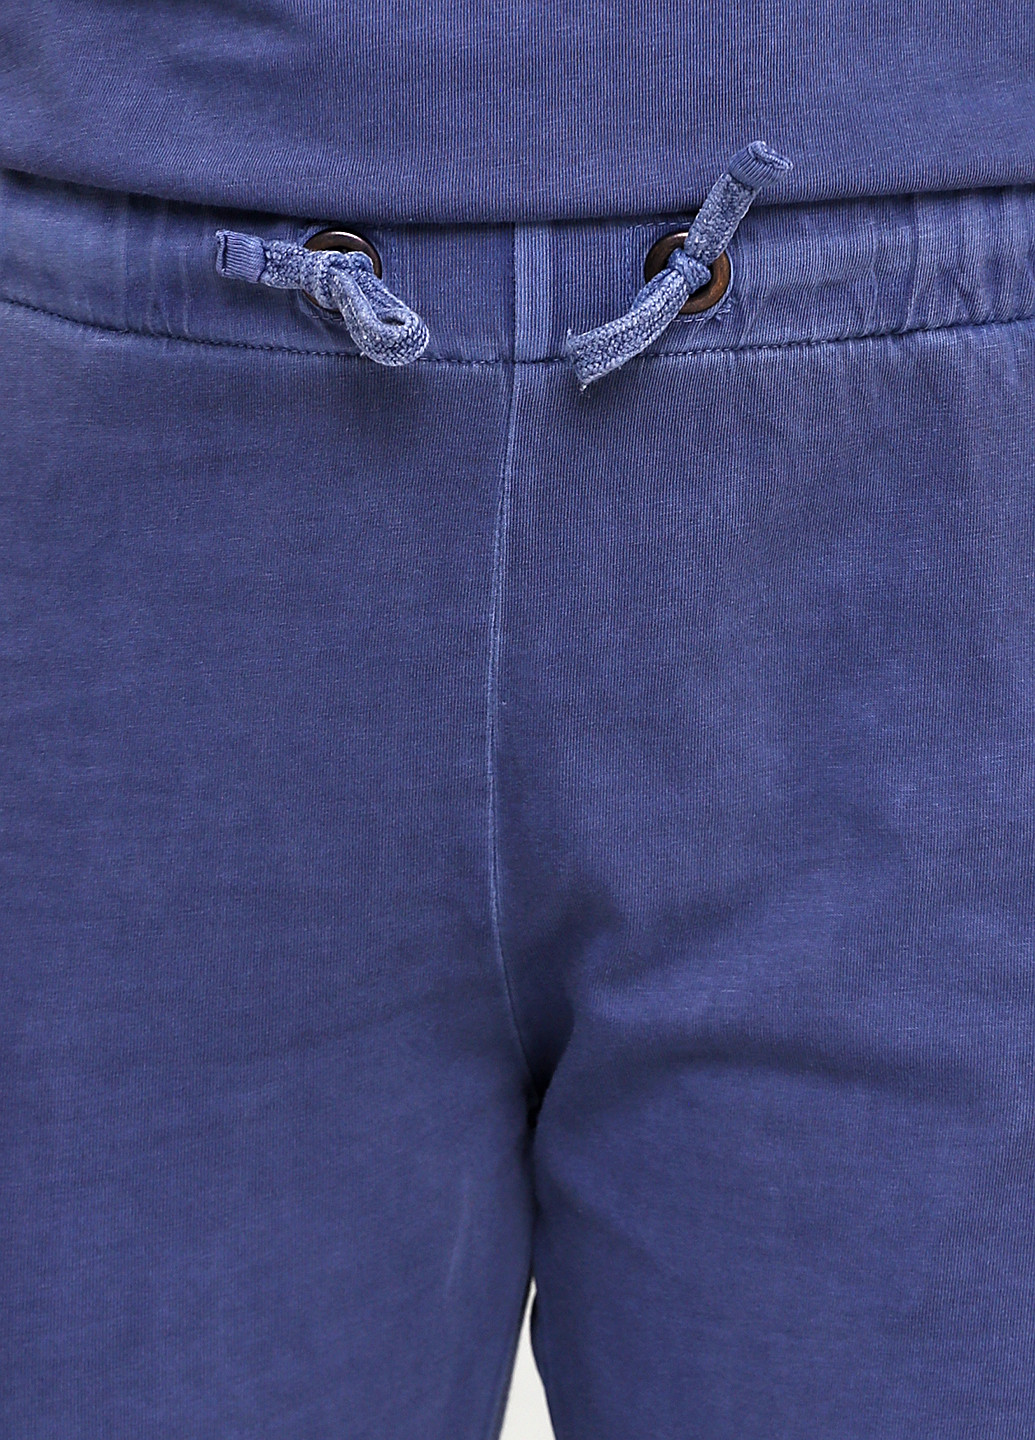 Комбинезон Ra-Re комбинезон-брюки однотонный тёмно-синий кэжуал